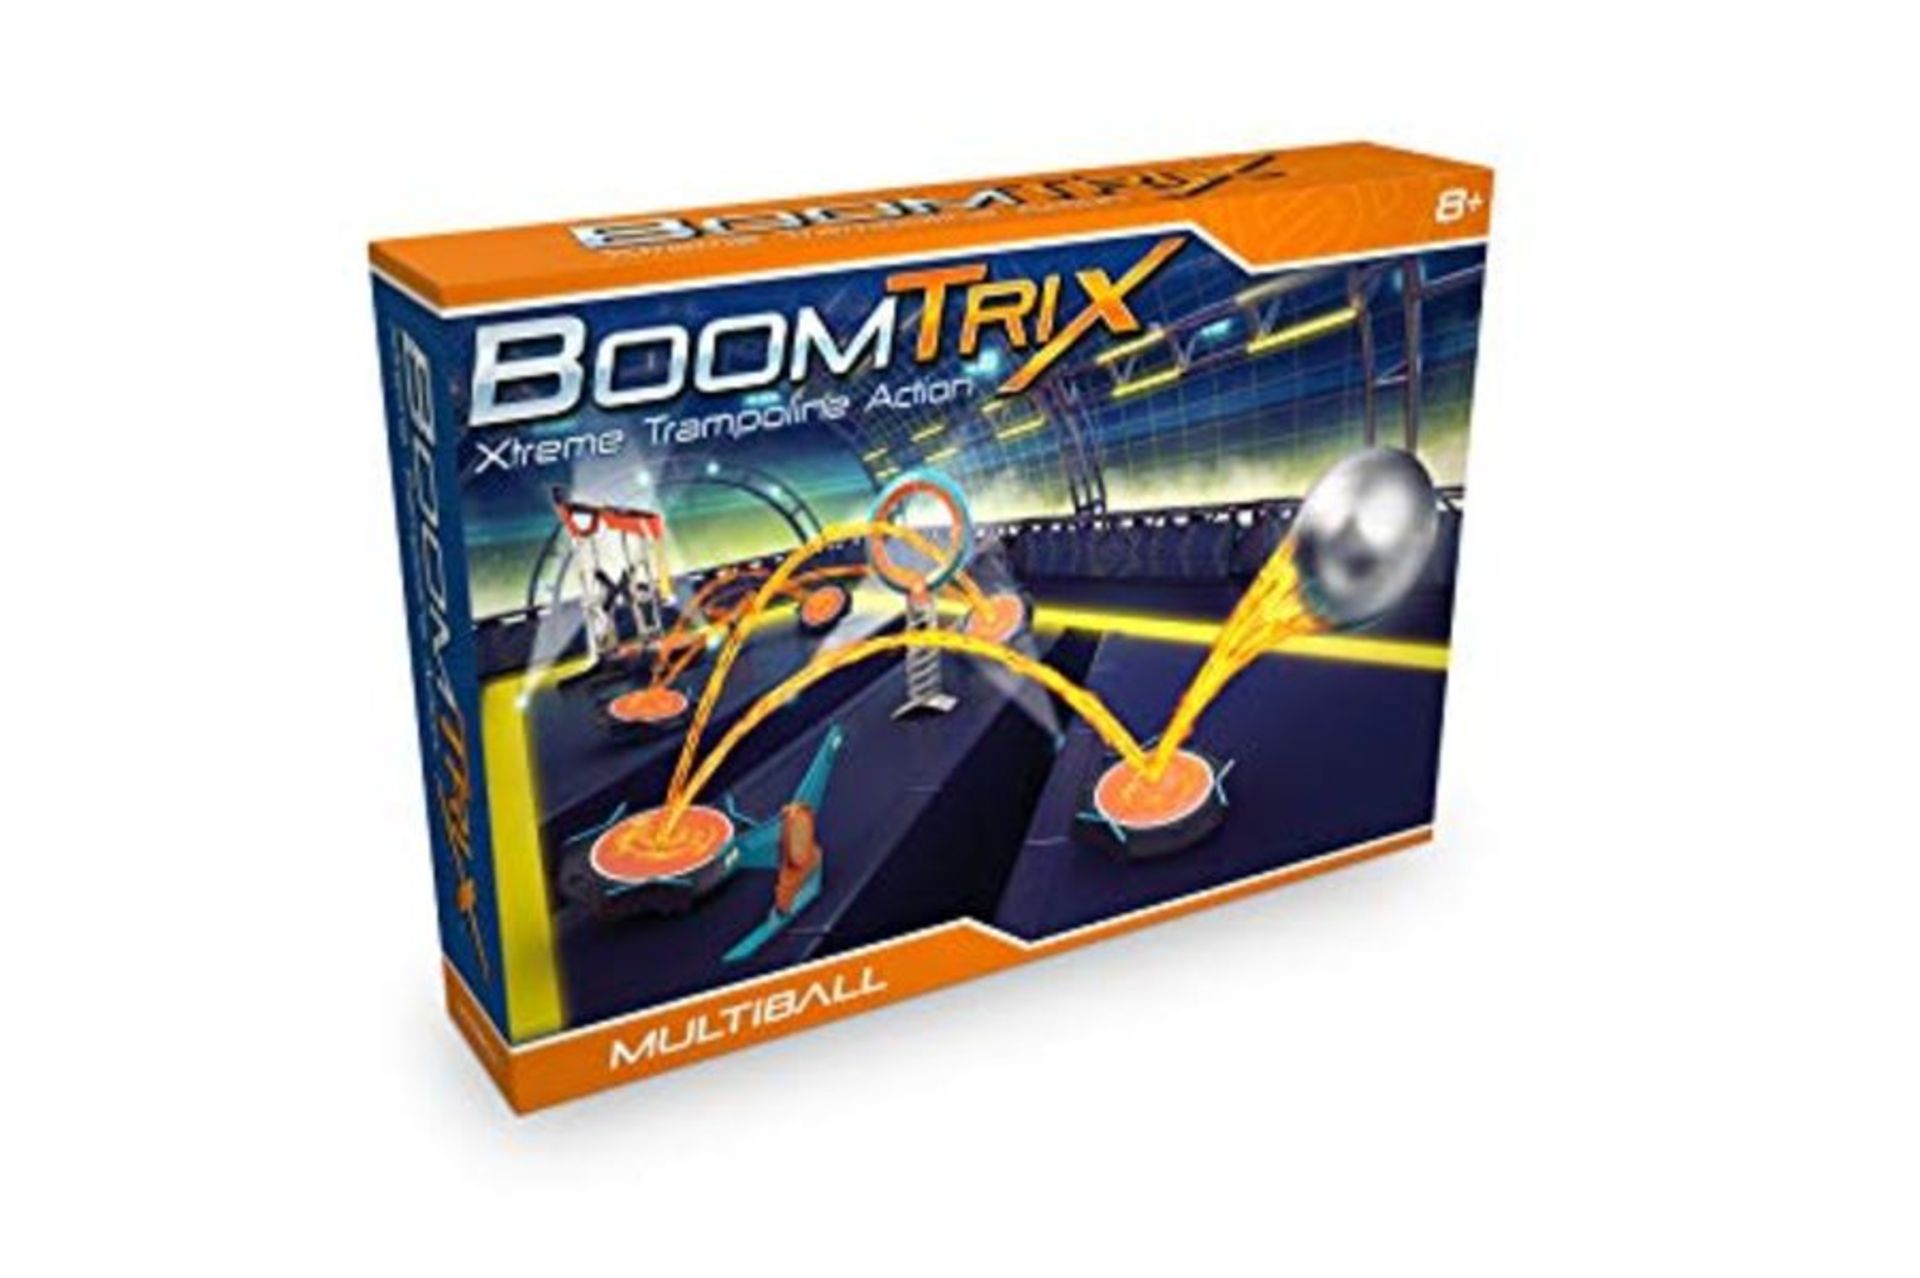 BoomTrix Multi-Colourball, Xtreme Trampoline Action for Kids Aged 8+, Multi-Colour